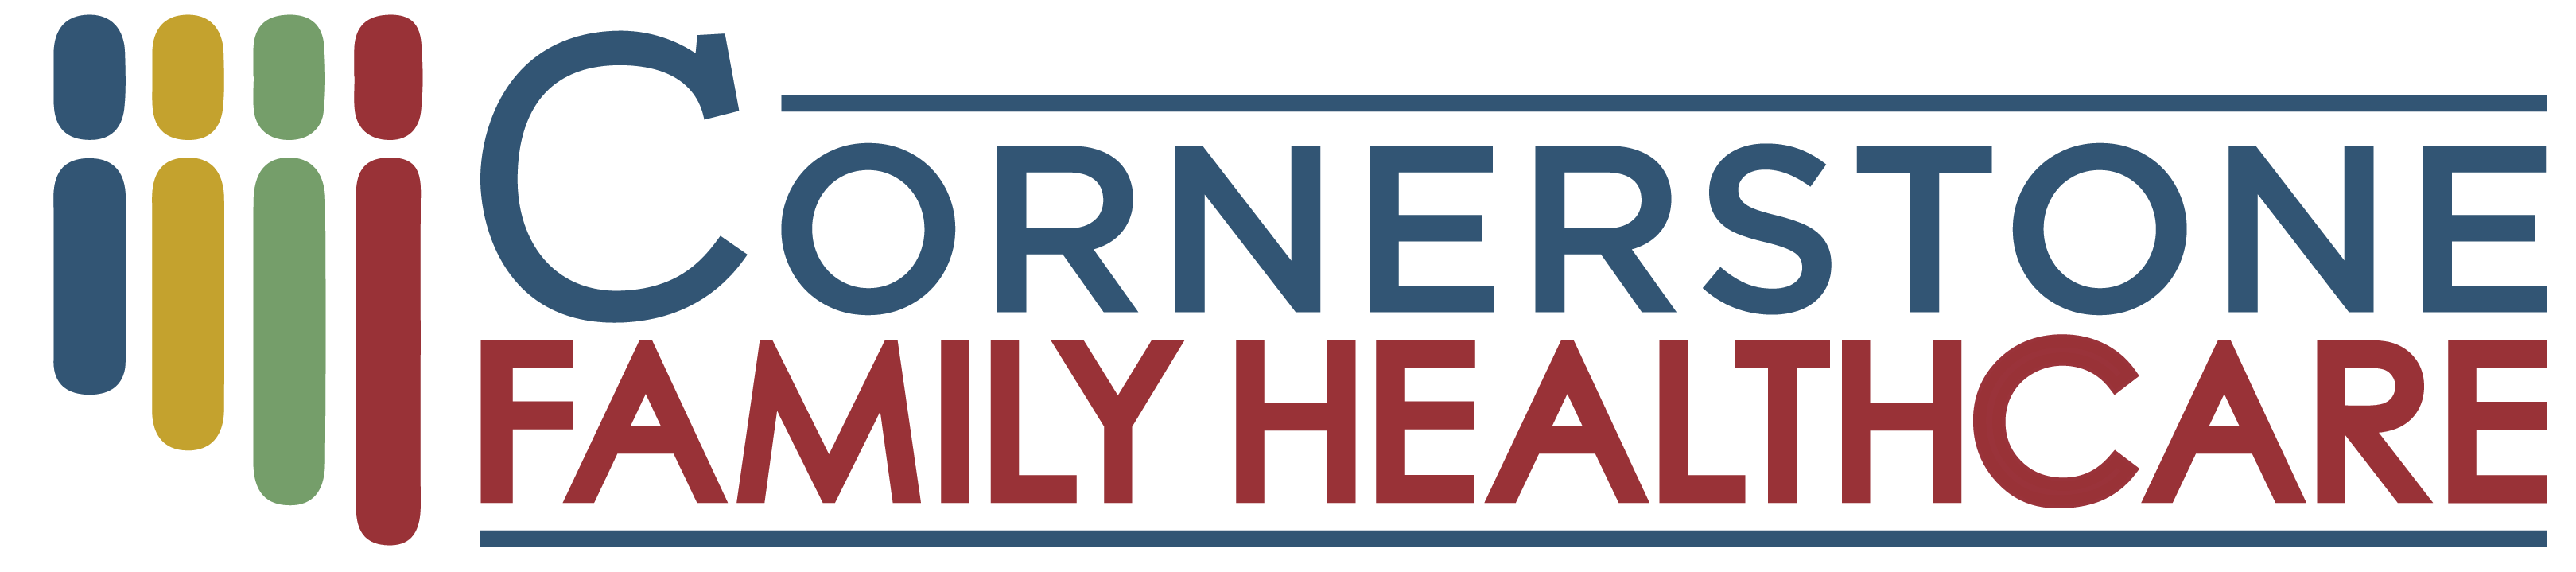 image of Cornerstone family healthcare logo